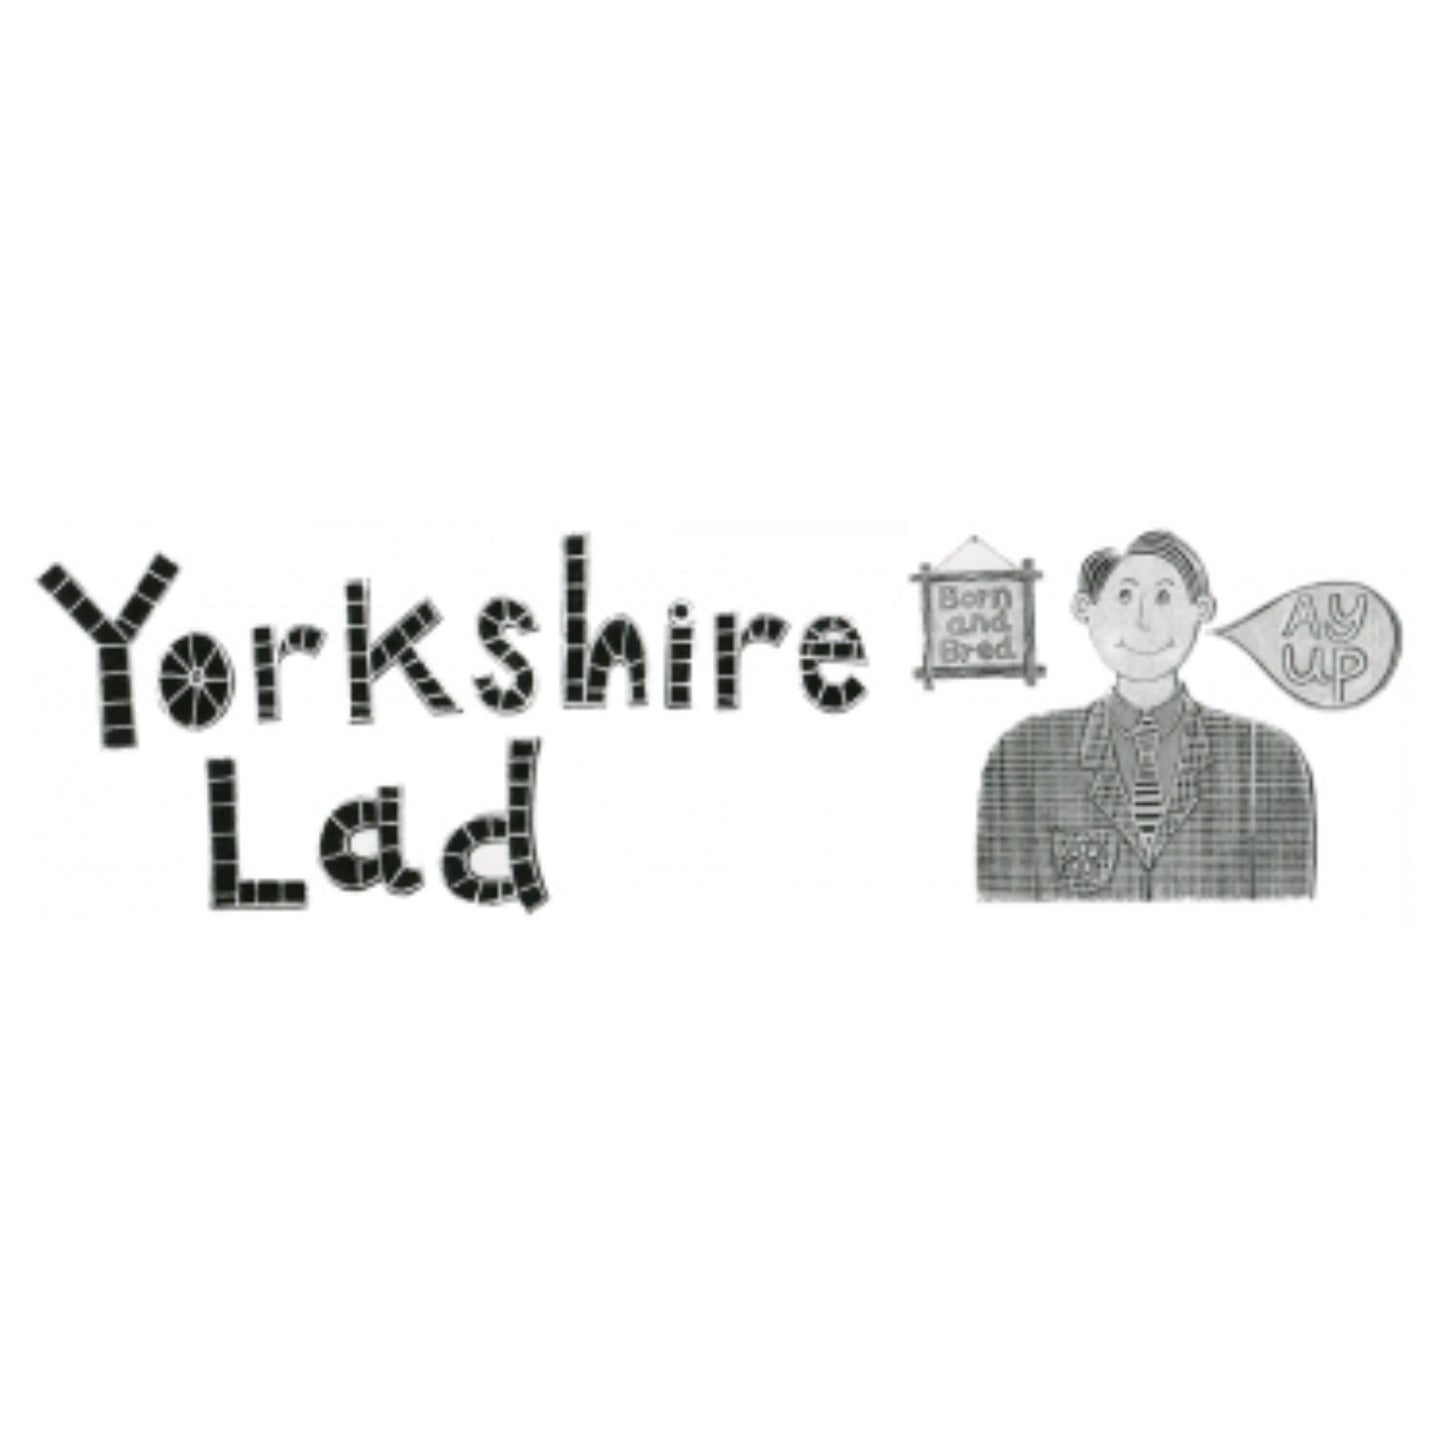 Yorkshire Lad Mug - The Great Yorkshire Shop